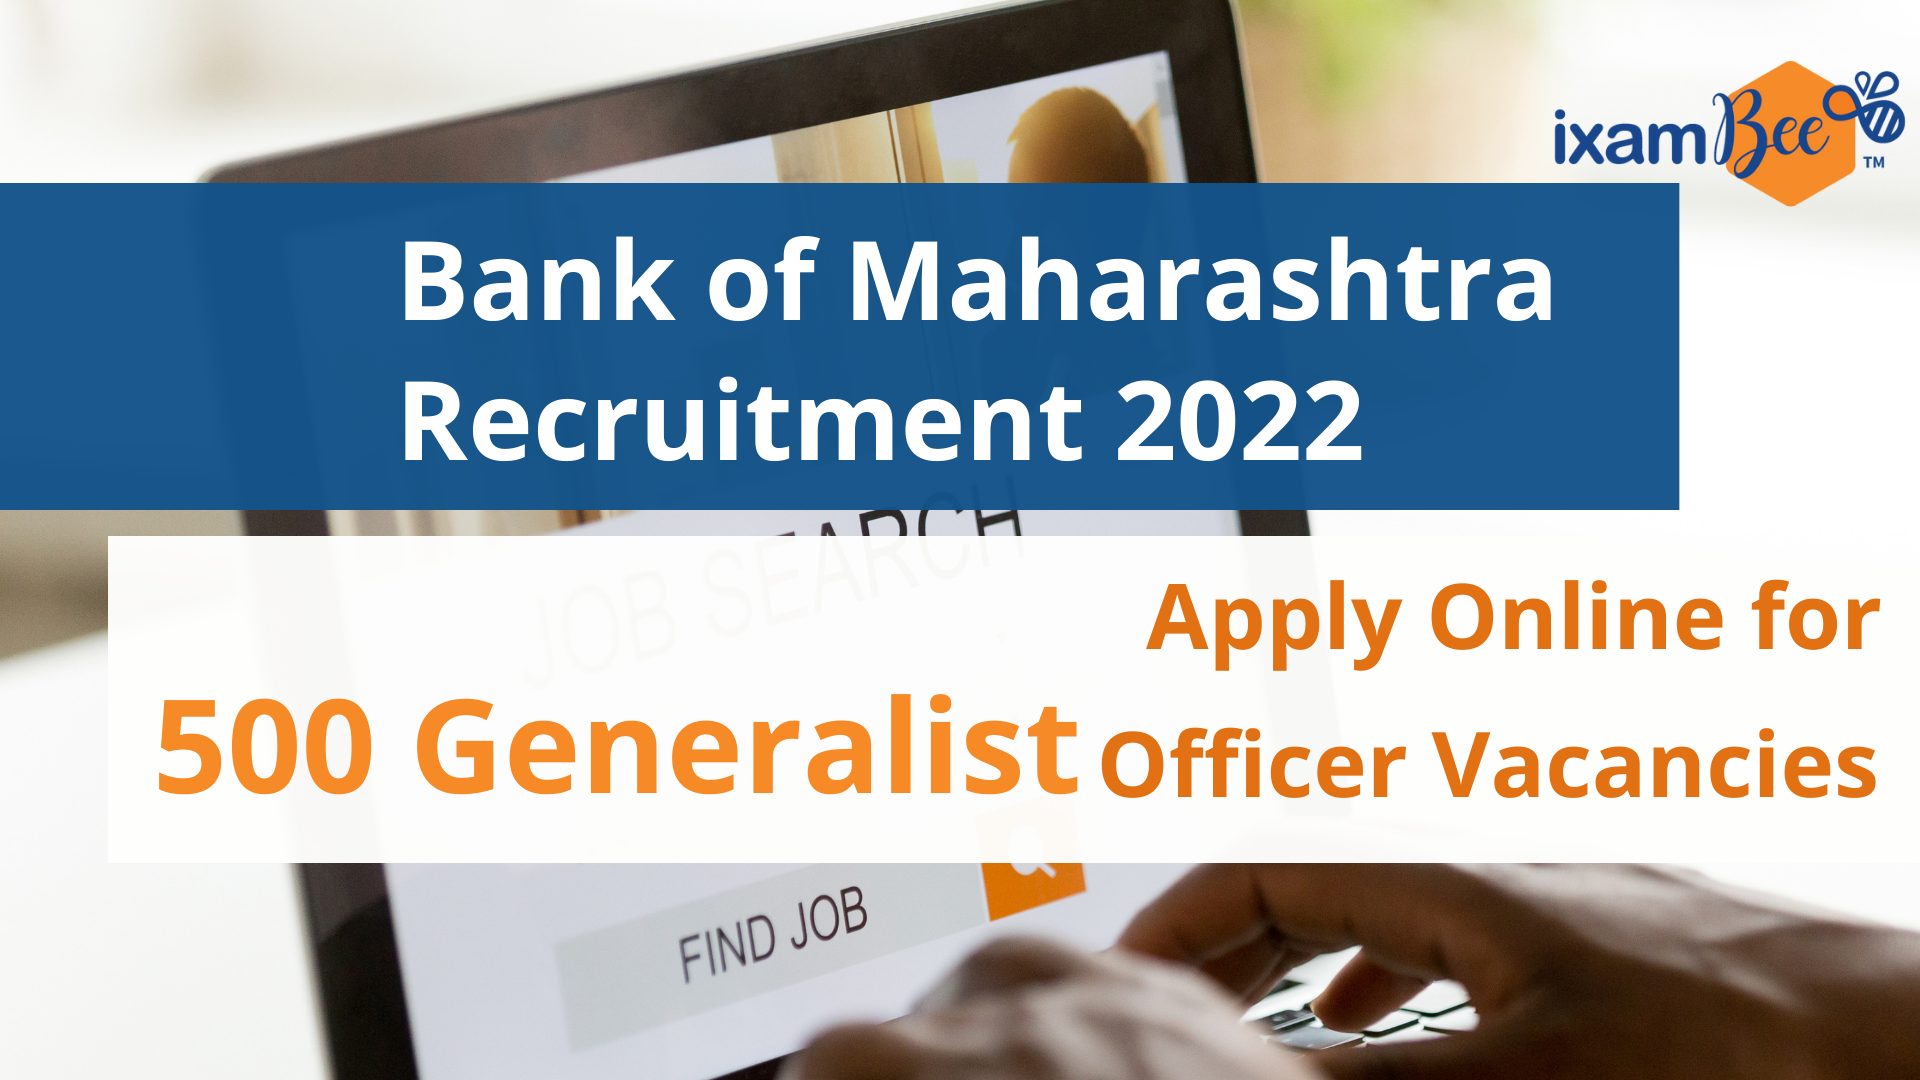 Bank of Maharashtra Recruitment 2022: Apply Online for 500 Vacancies